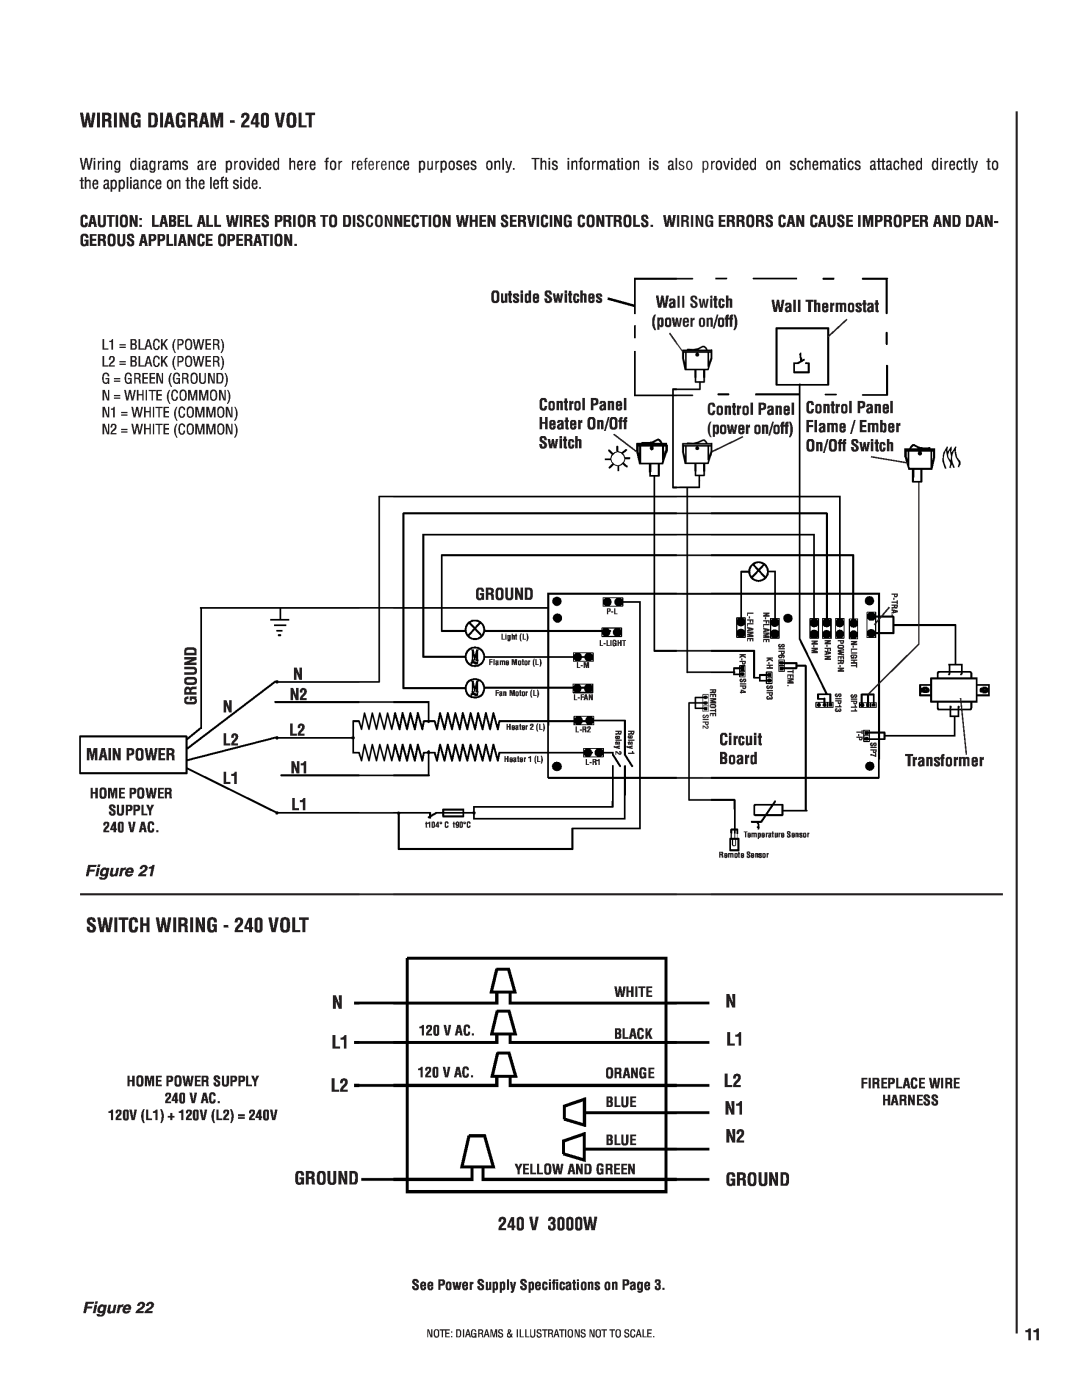 Lennox Hearth MPE-36R installation instructions SWITCH WIRING - 240 VOLT, 240 V 3000W, N L1, Ground 